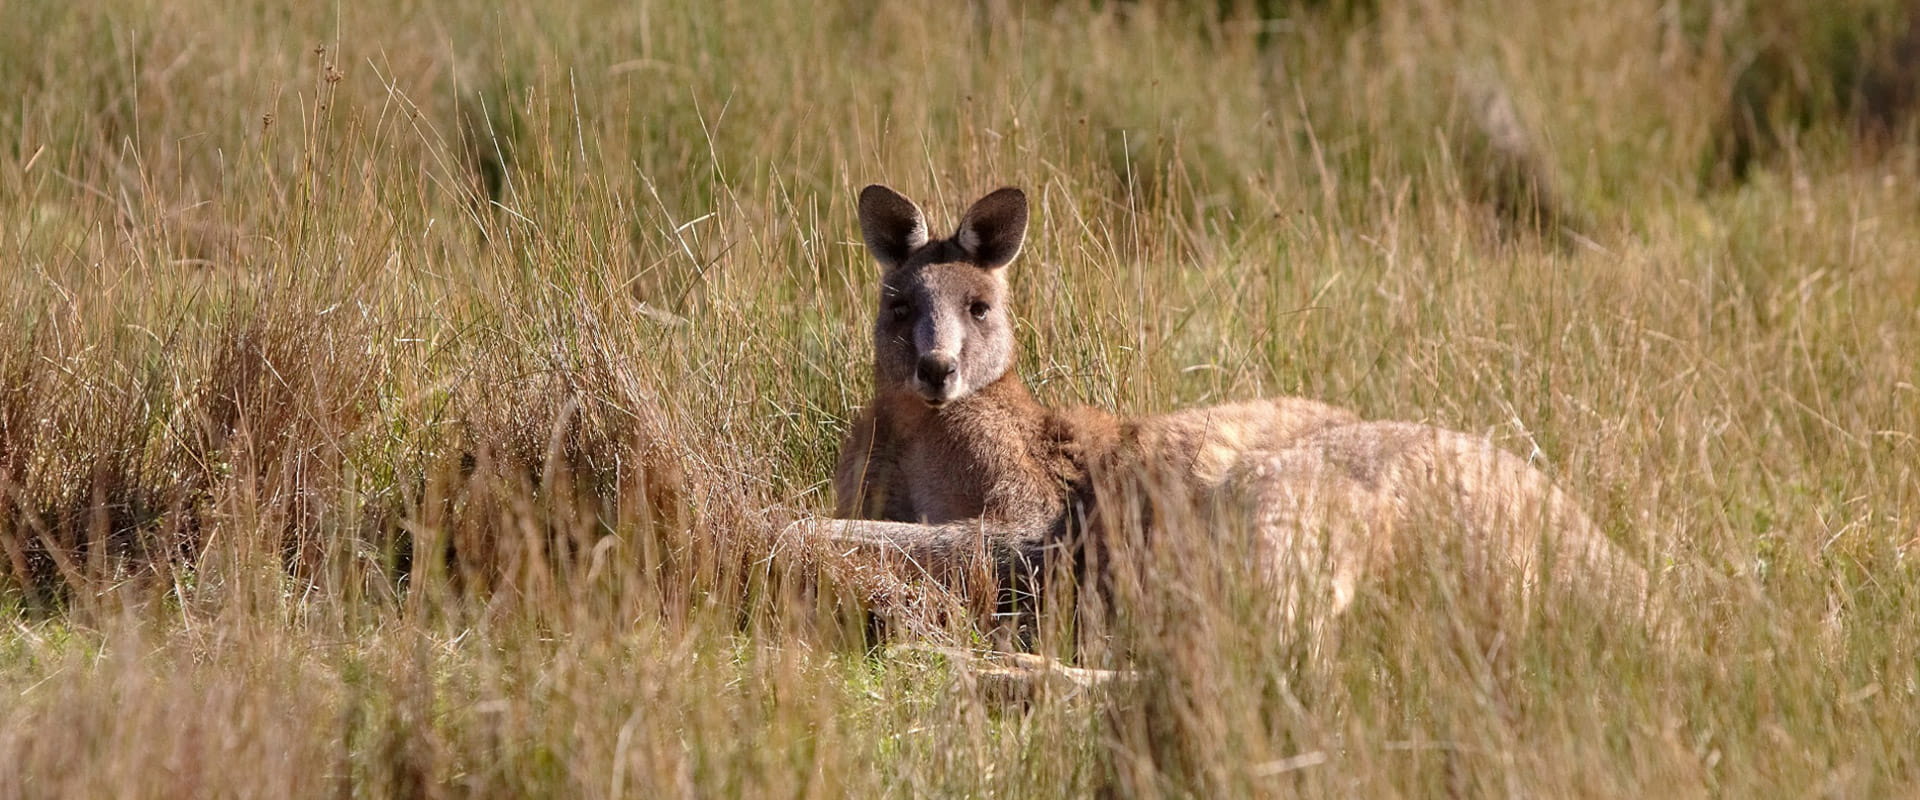 A kangaroo lies down in dry grass